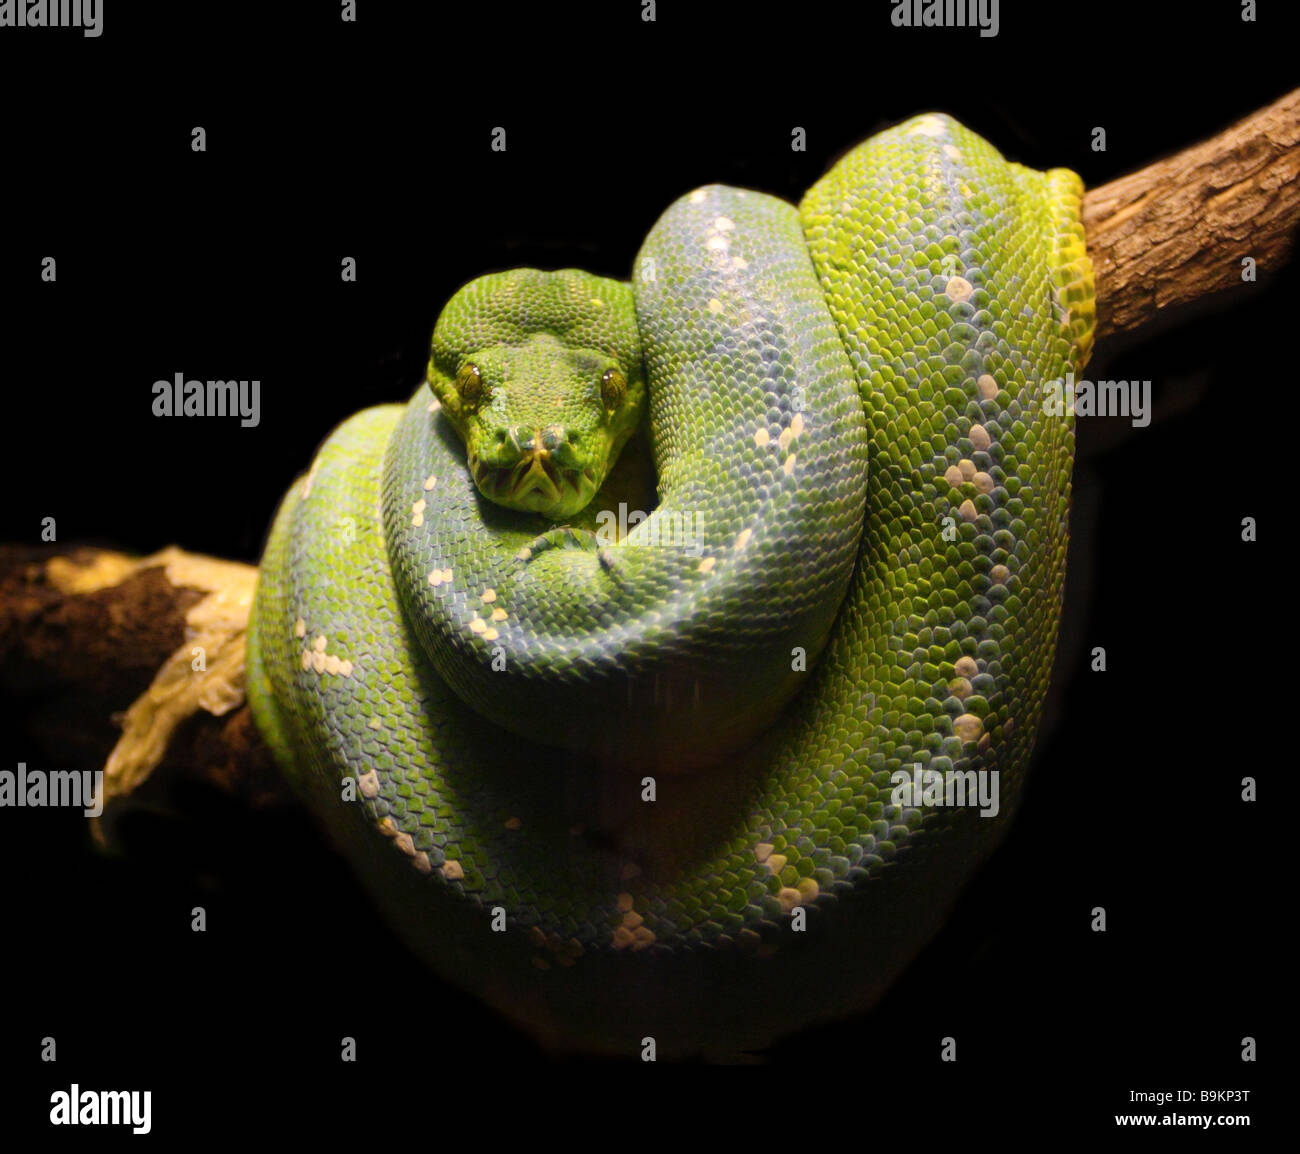 fine close up image of green snake wild animal background Stock Photo